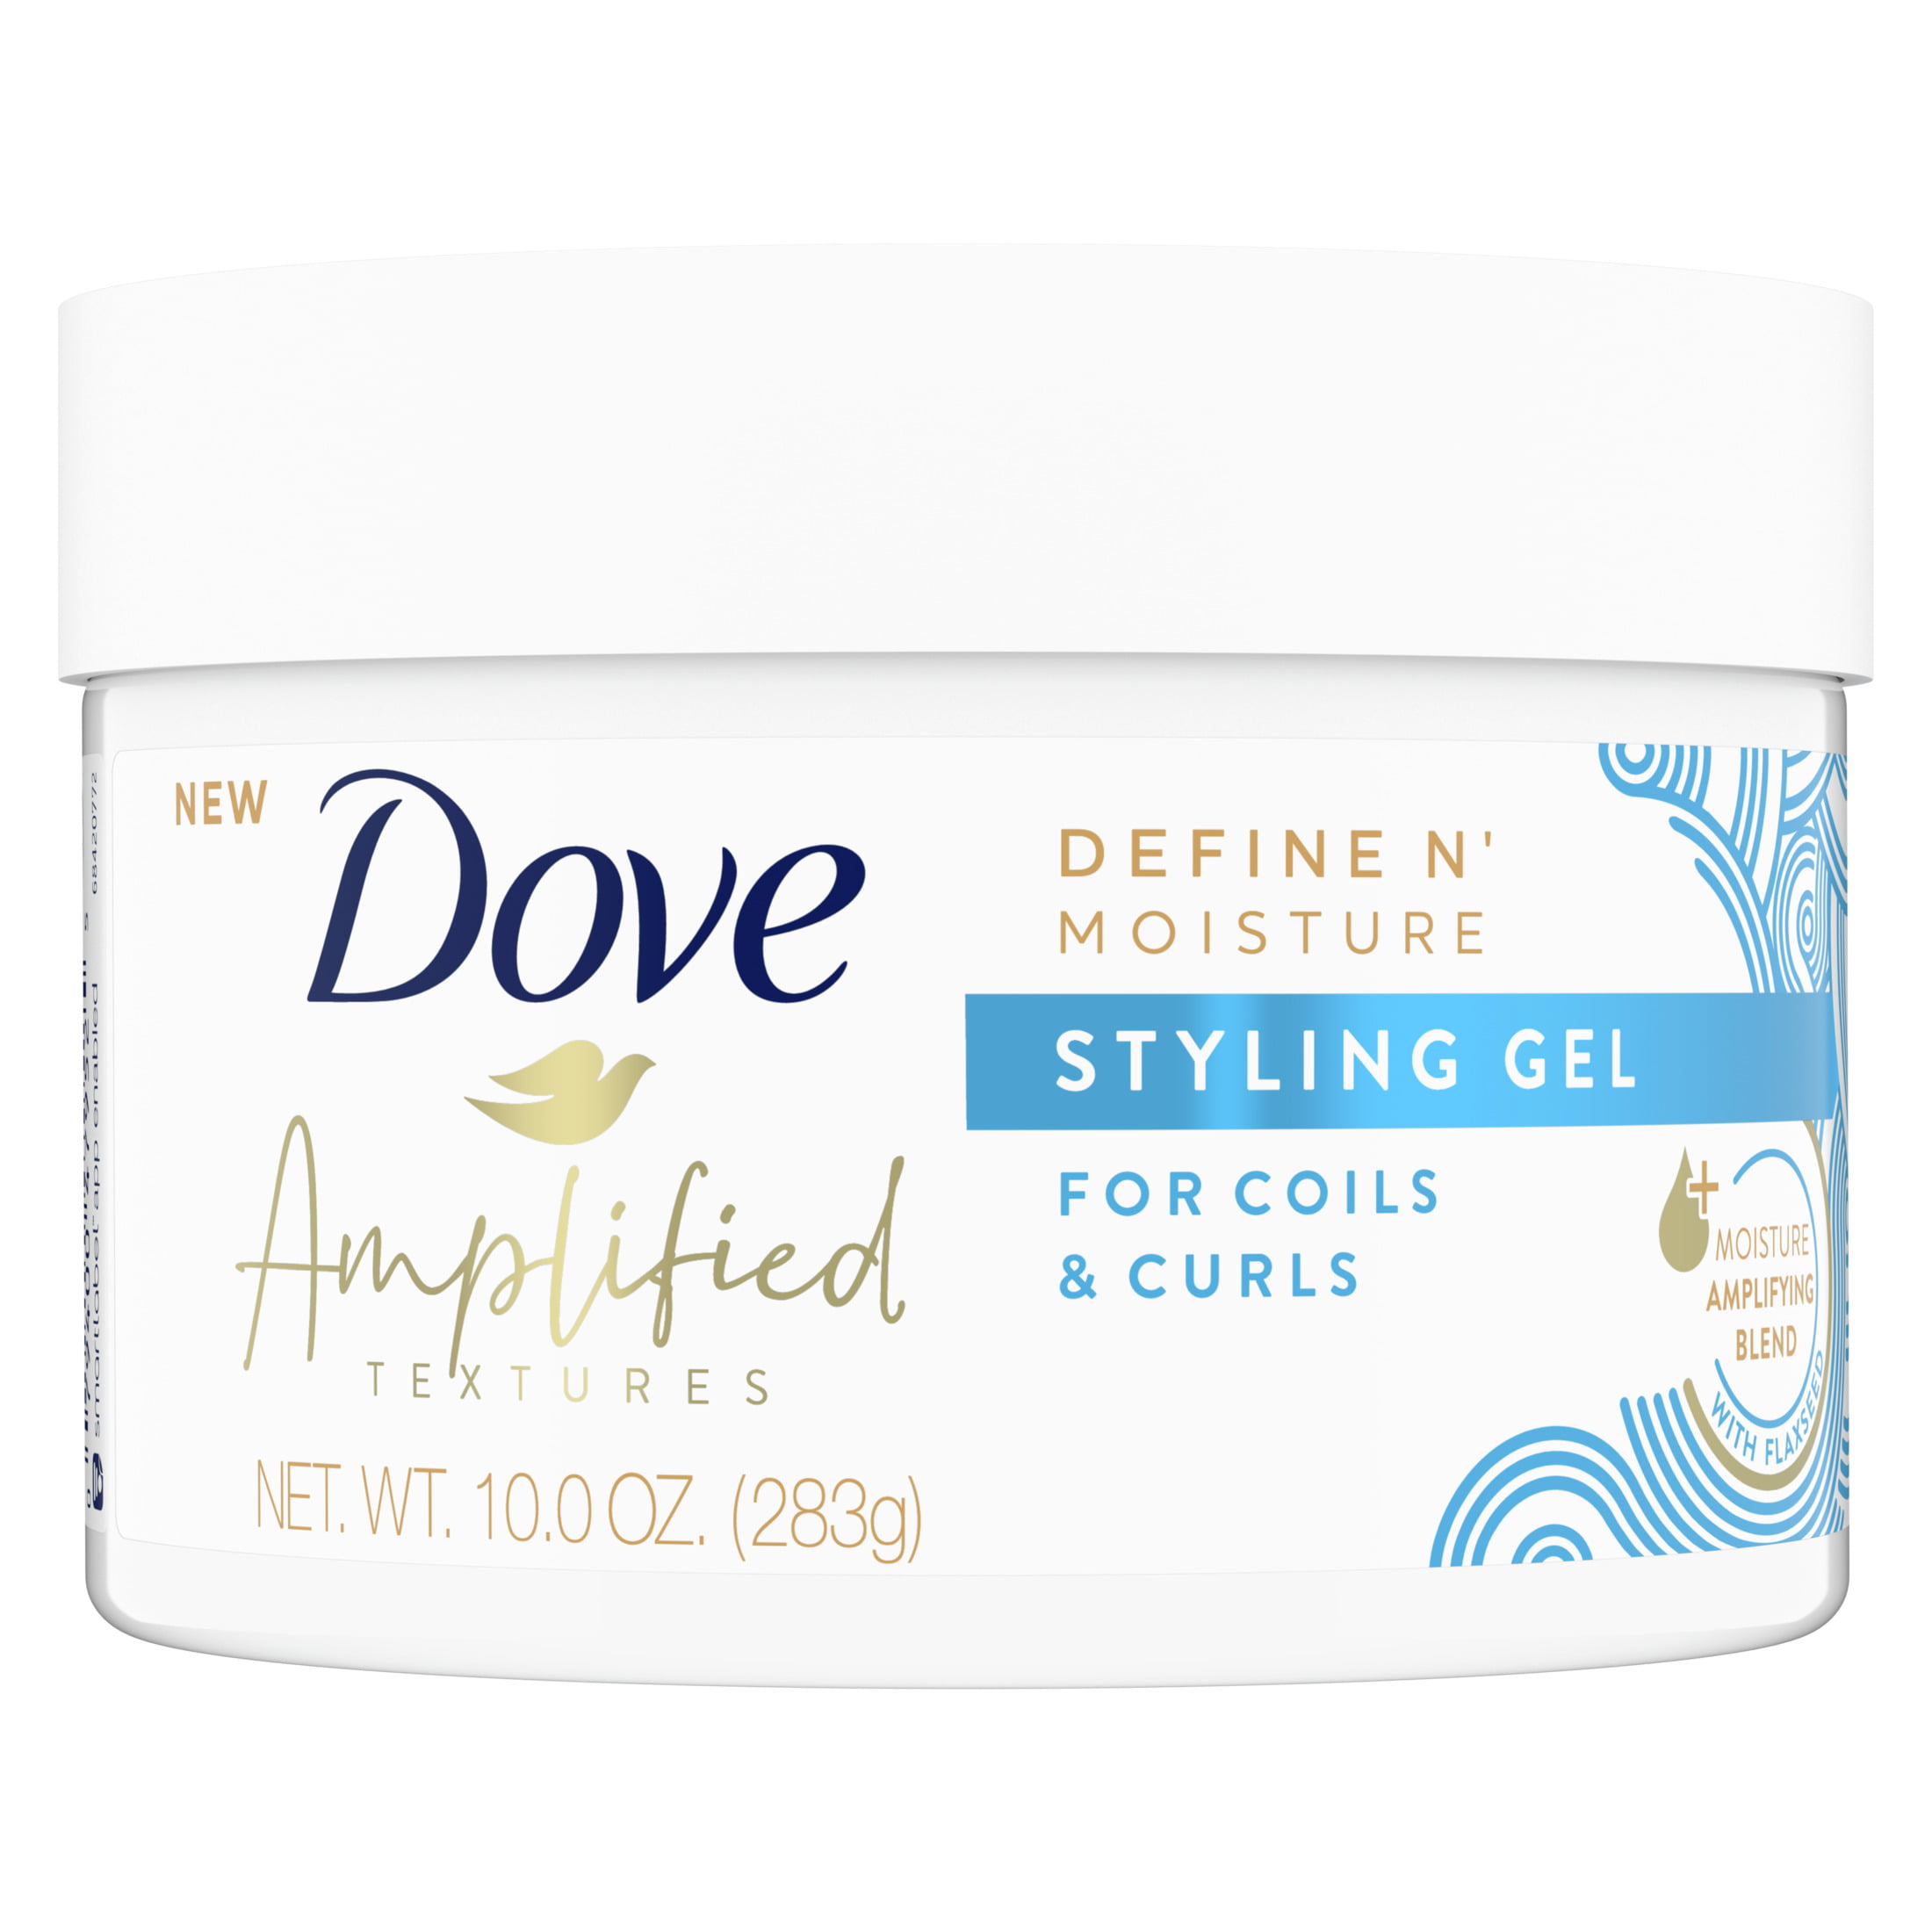 Dove Amplified Textures Nourishing Define N' Moisture Jar Hair Styling Gel,   oz 